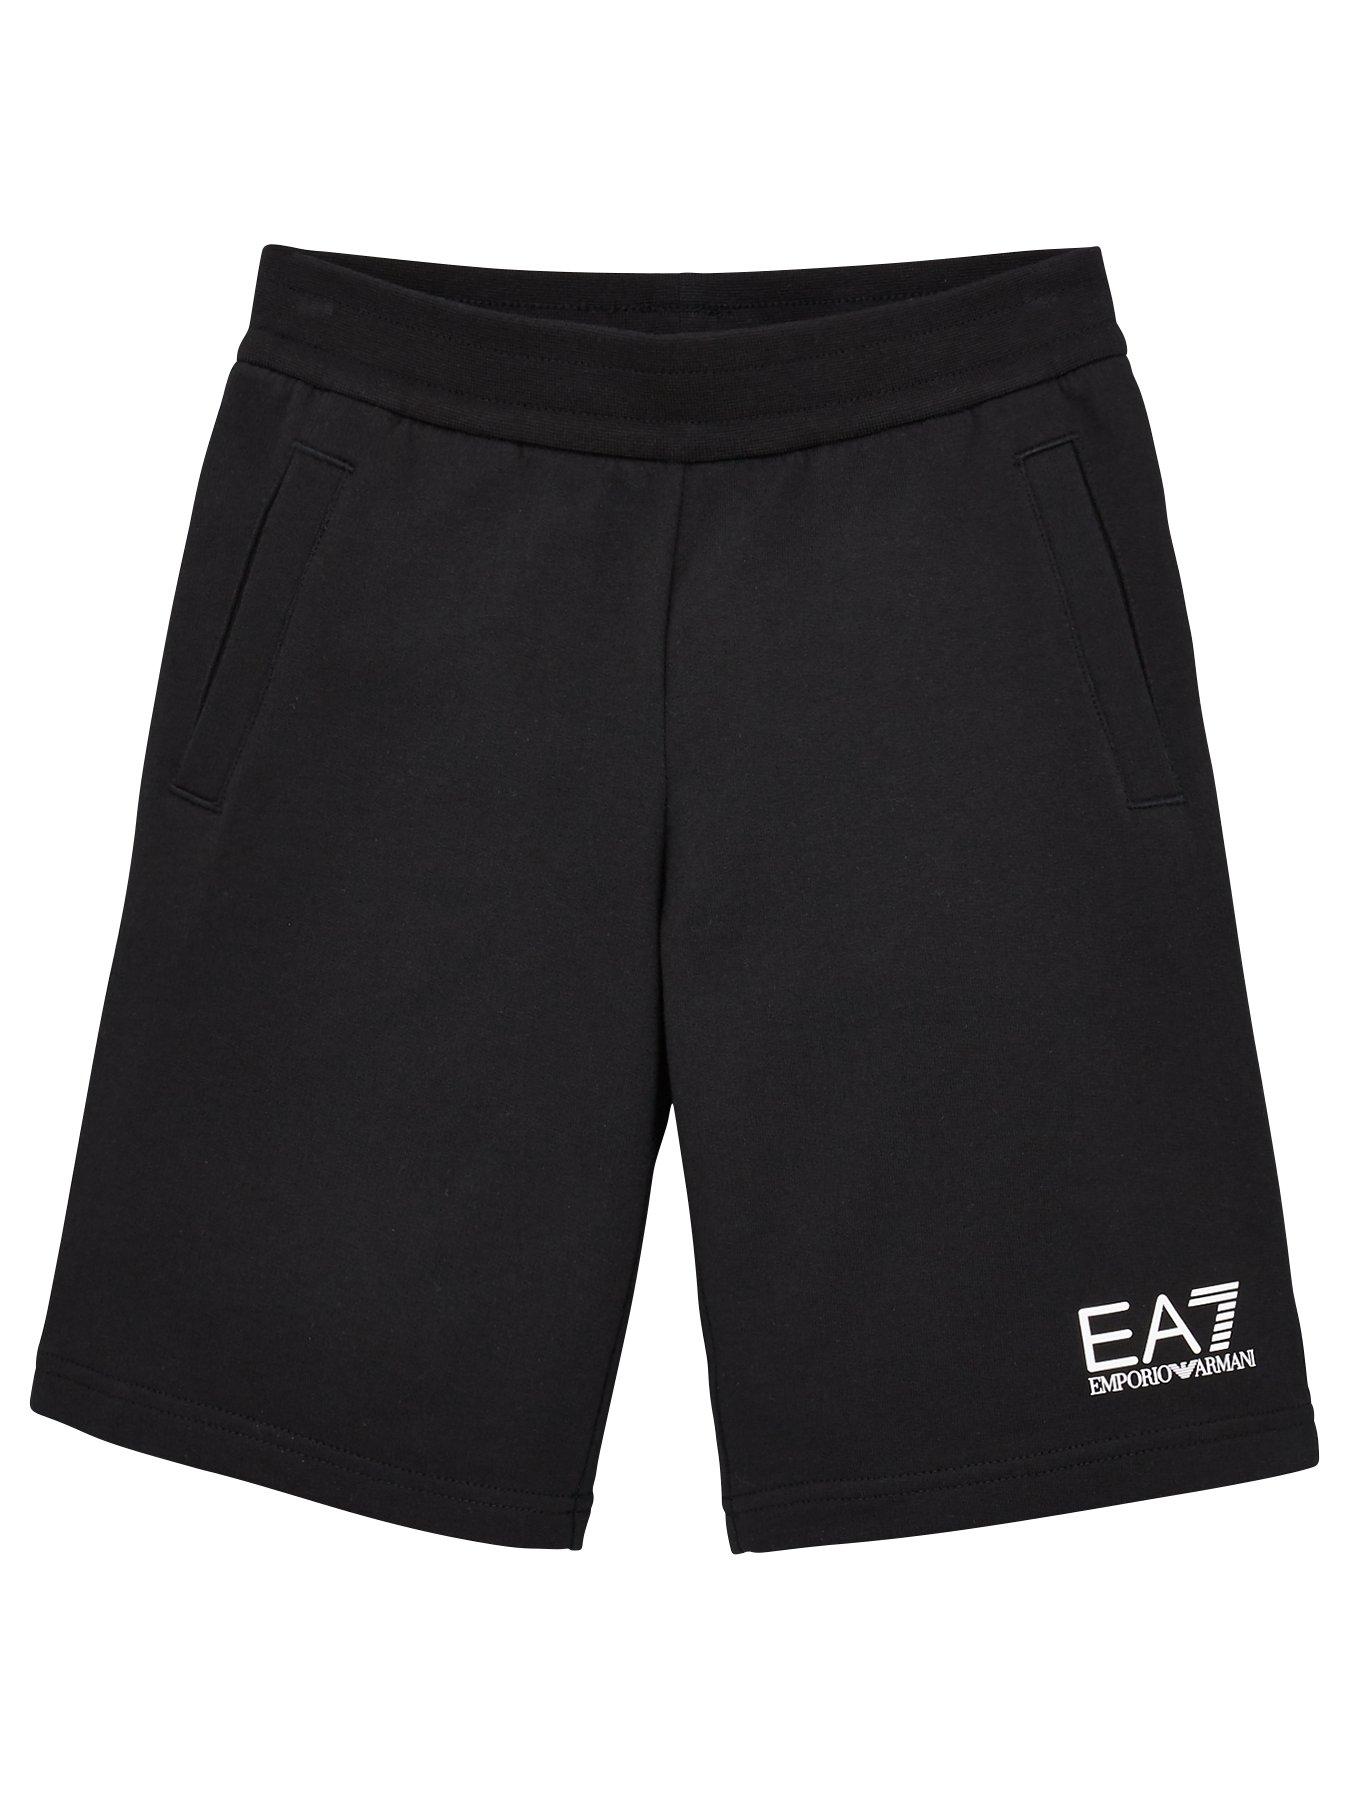 EA7 Emporio Armani Boys Classic Short 